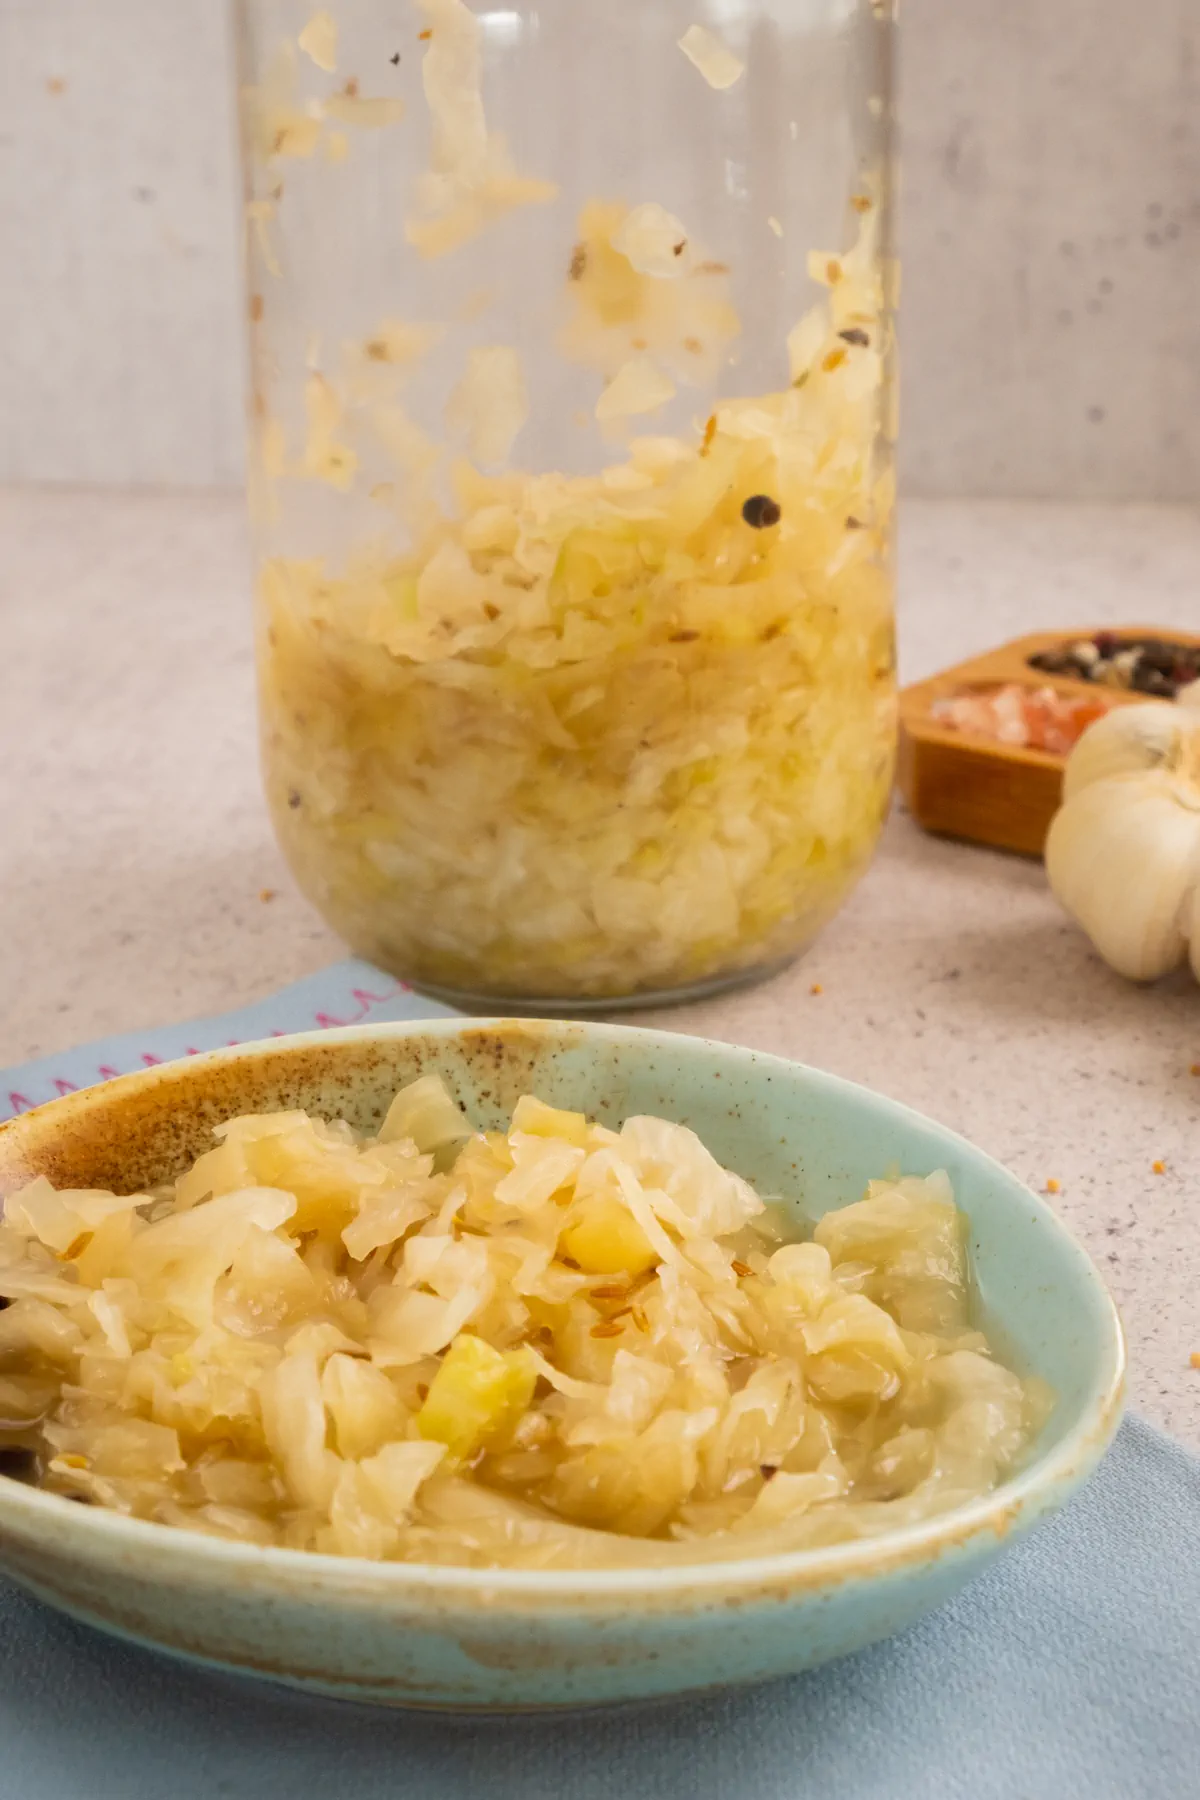 Homemade sauerkraut served in a ceramic bowl from a glass jar.